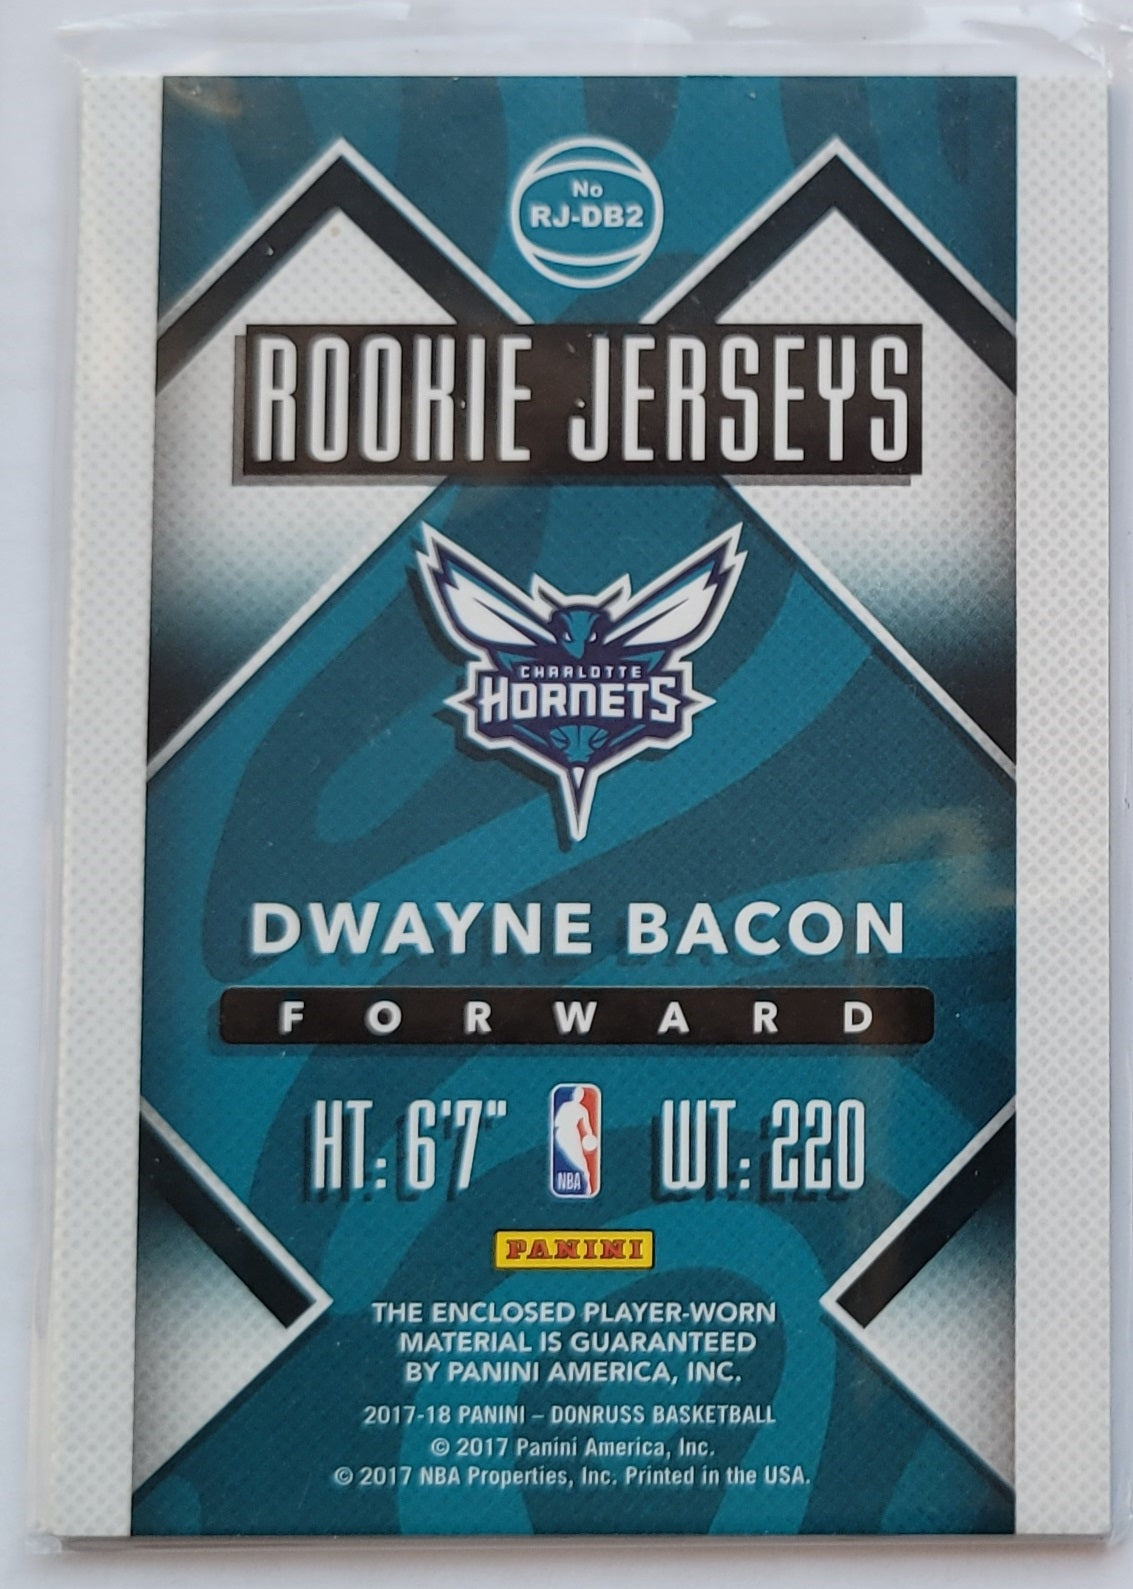 Dwayne Bacon - 2017-18 Donruss Rookie Jerseys #RJ-DB2